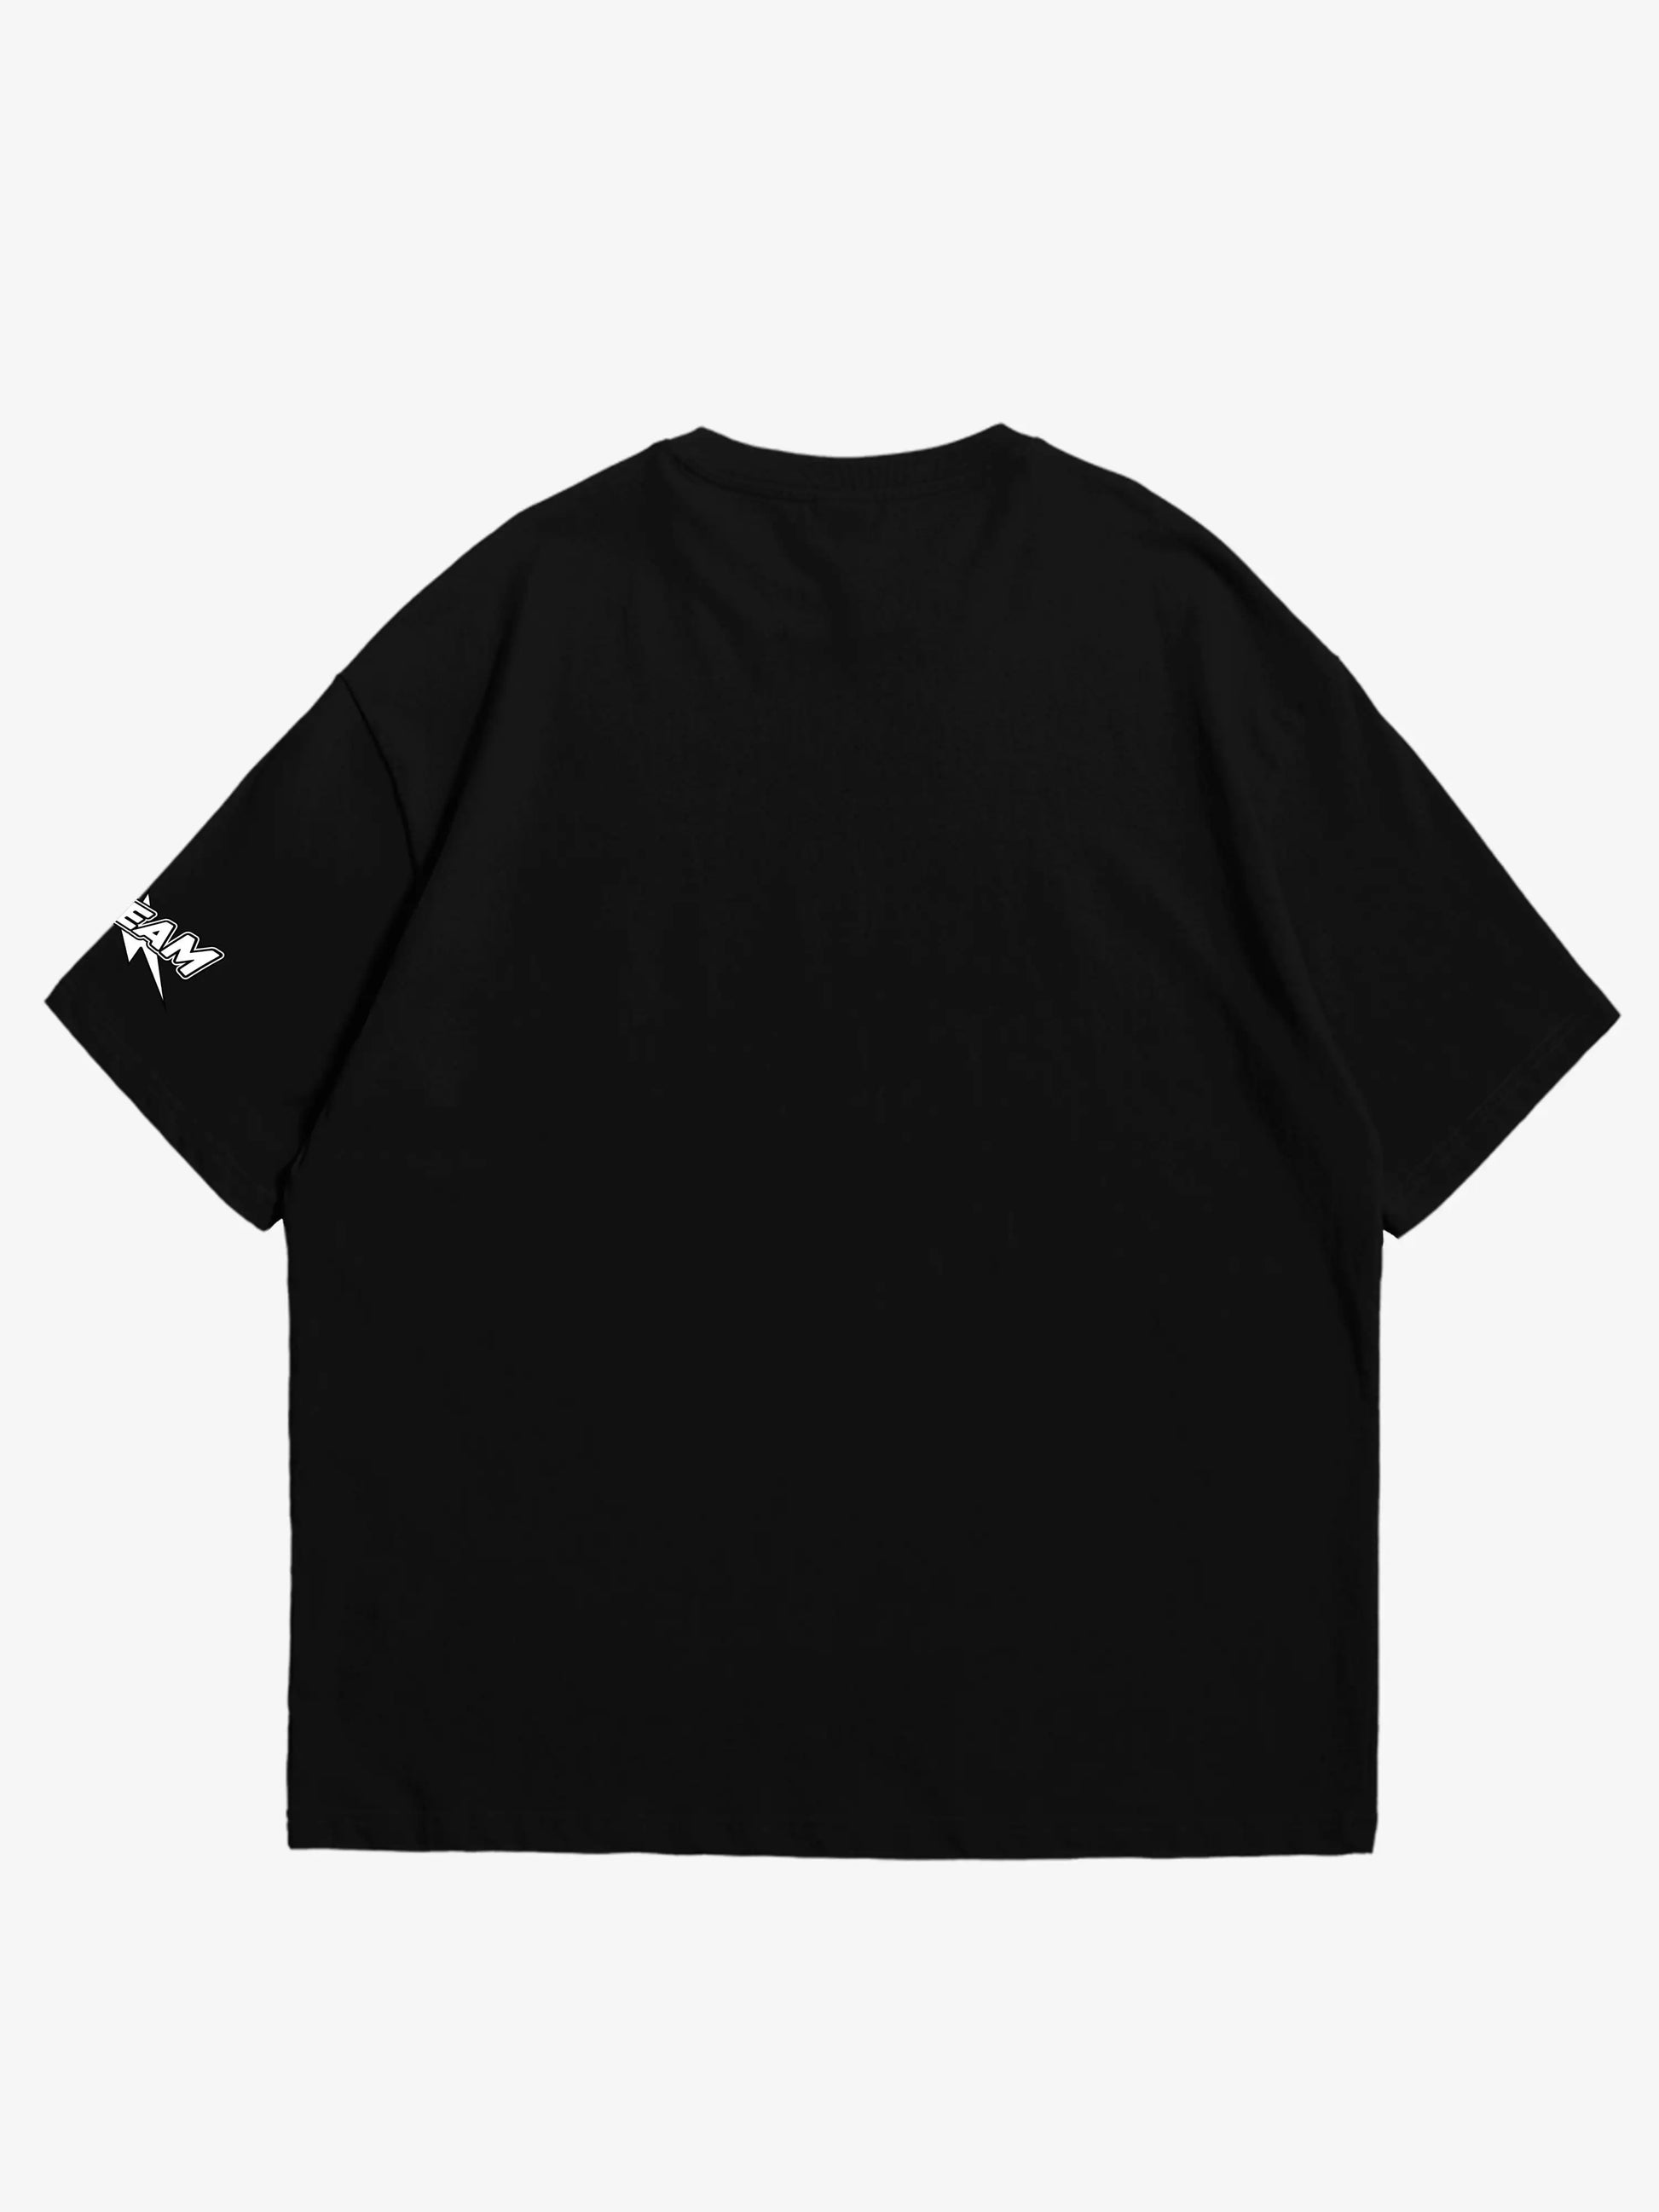 Black oversized t-shirt, savage band metal y2k print, skream streetwear t-shirt 